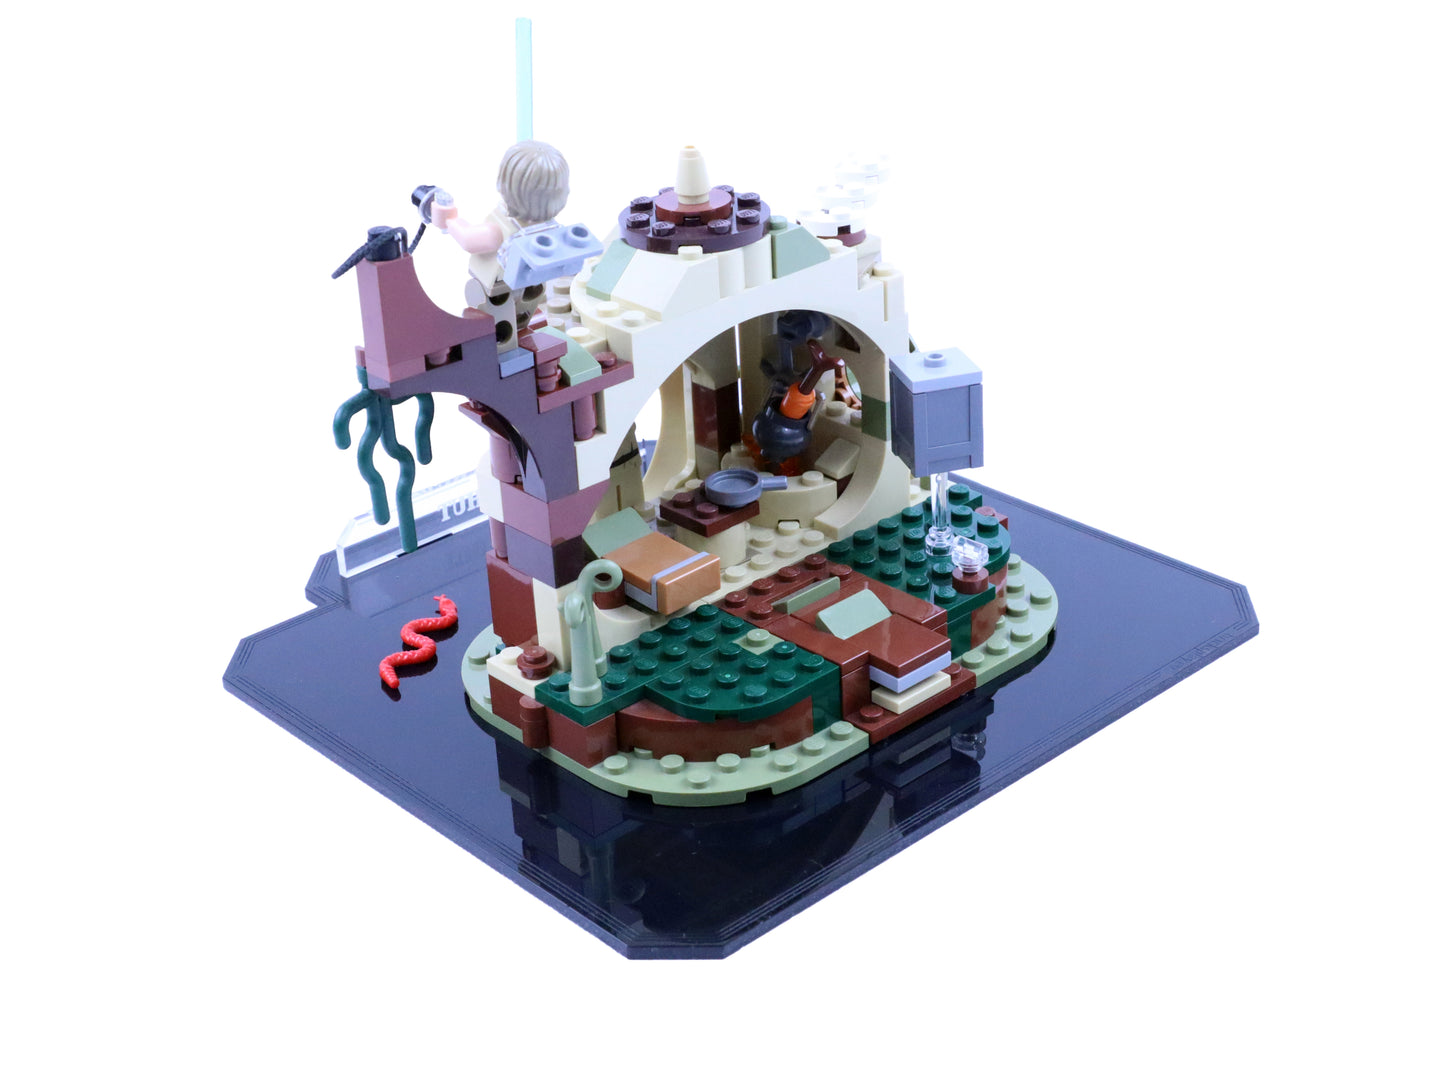 Yoda's Hut (75208) Display Stand 